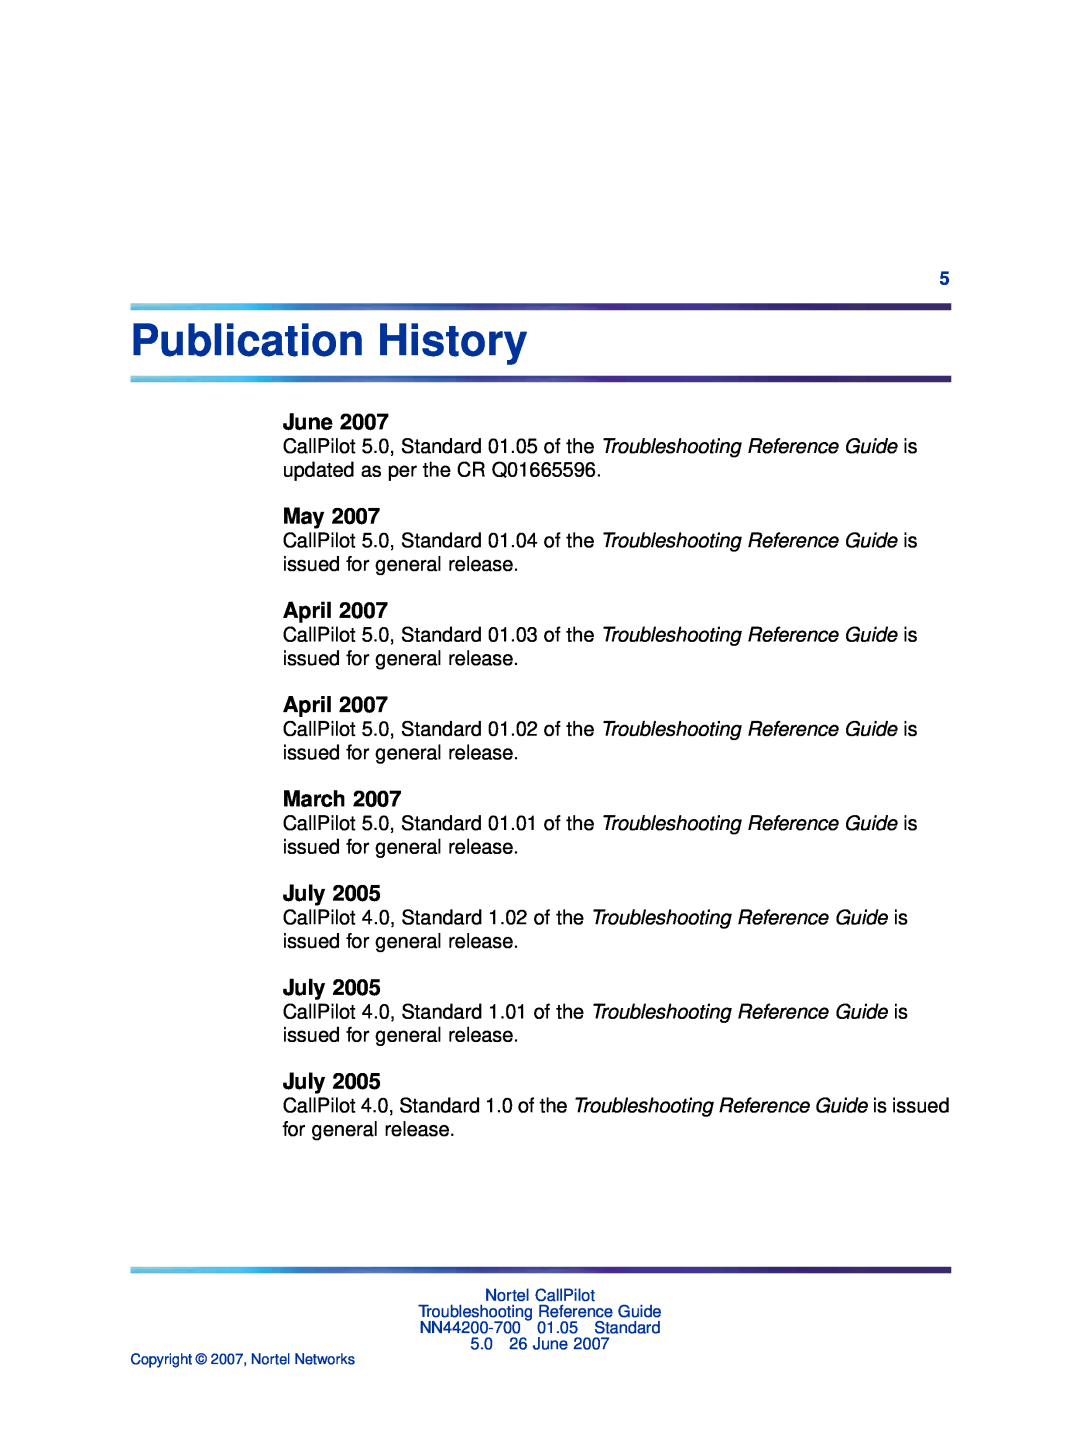 Nortel Networks NN44200-700 manual Publication History, June, April, March, July 